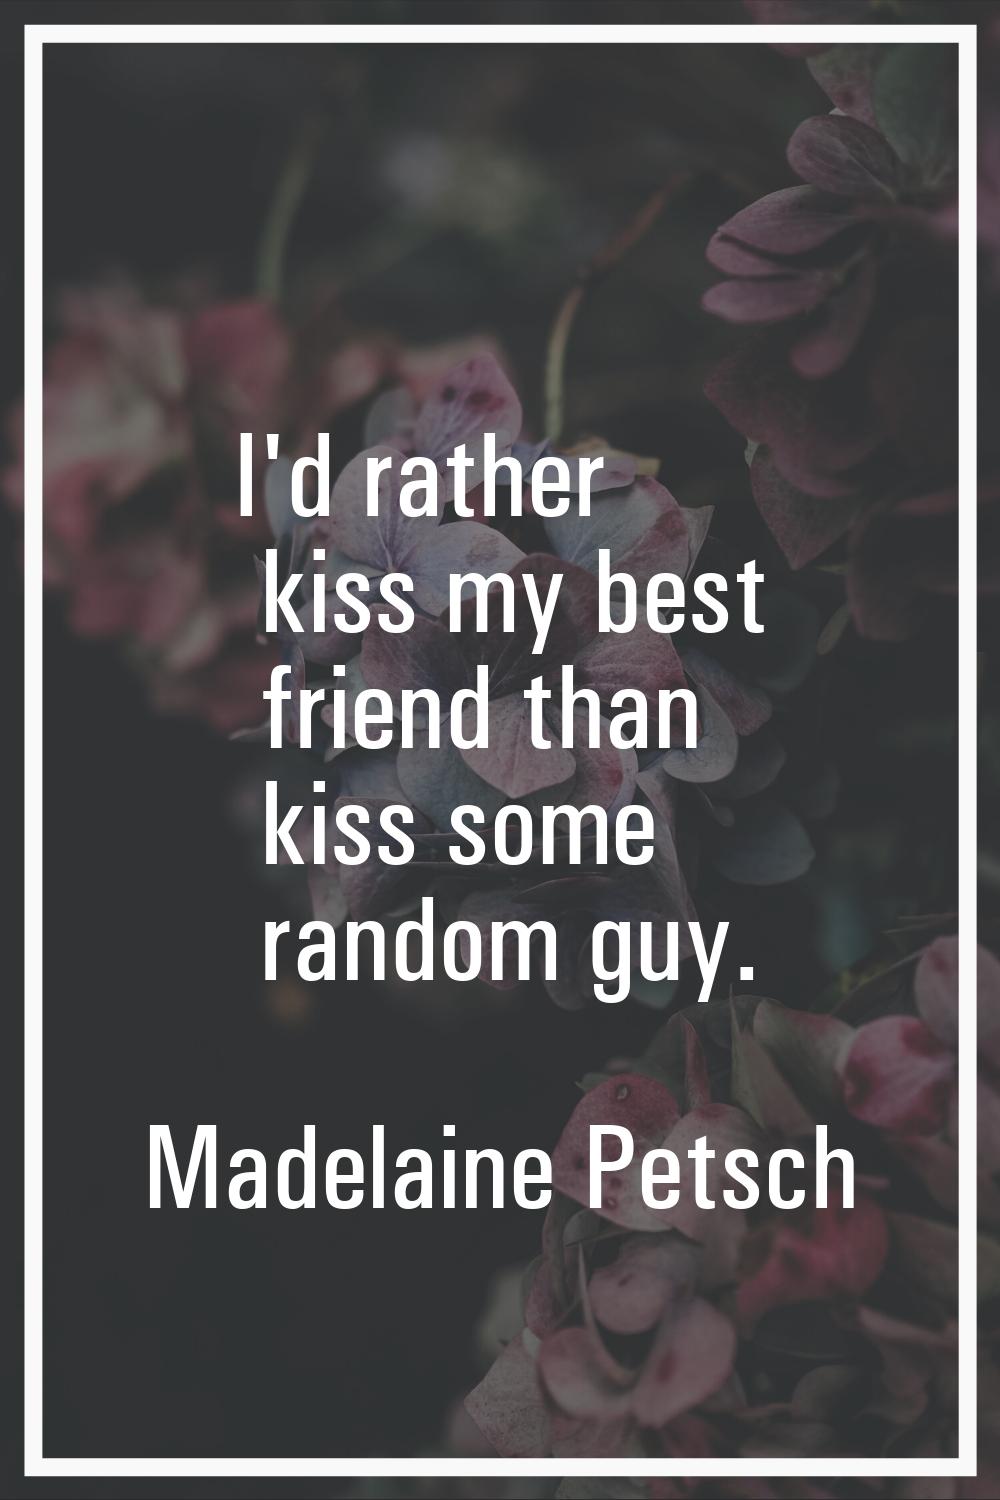 I'd rather kiss my best friend than kiss some random guy.